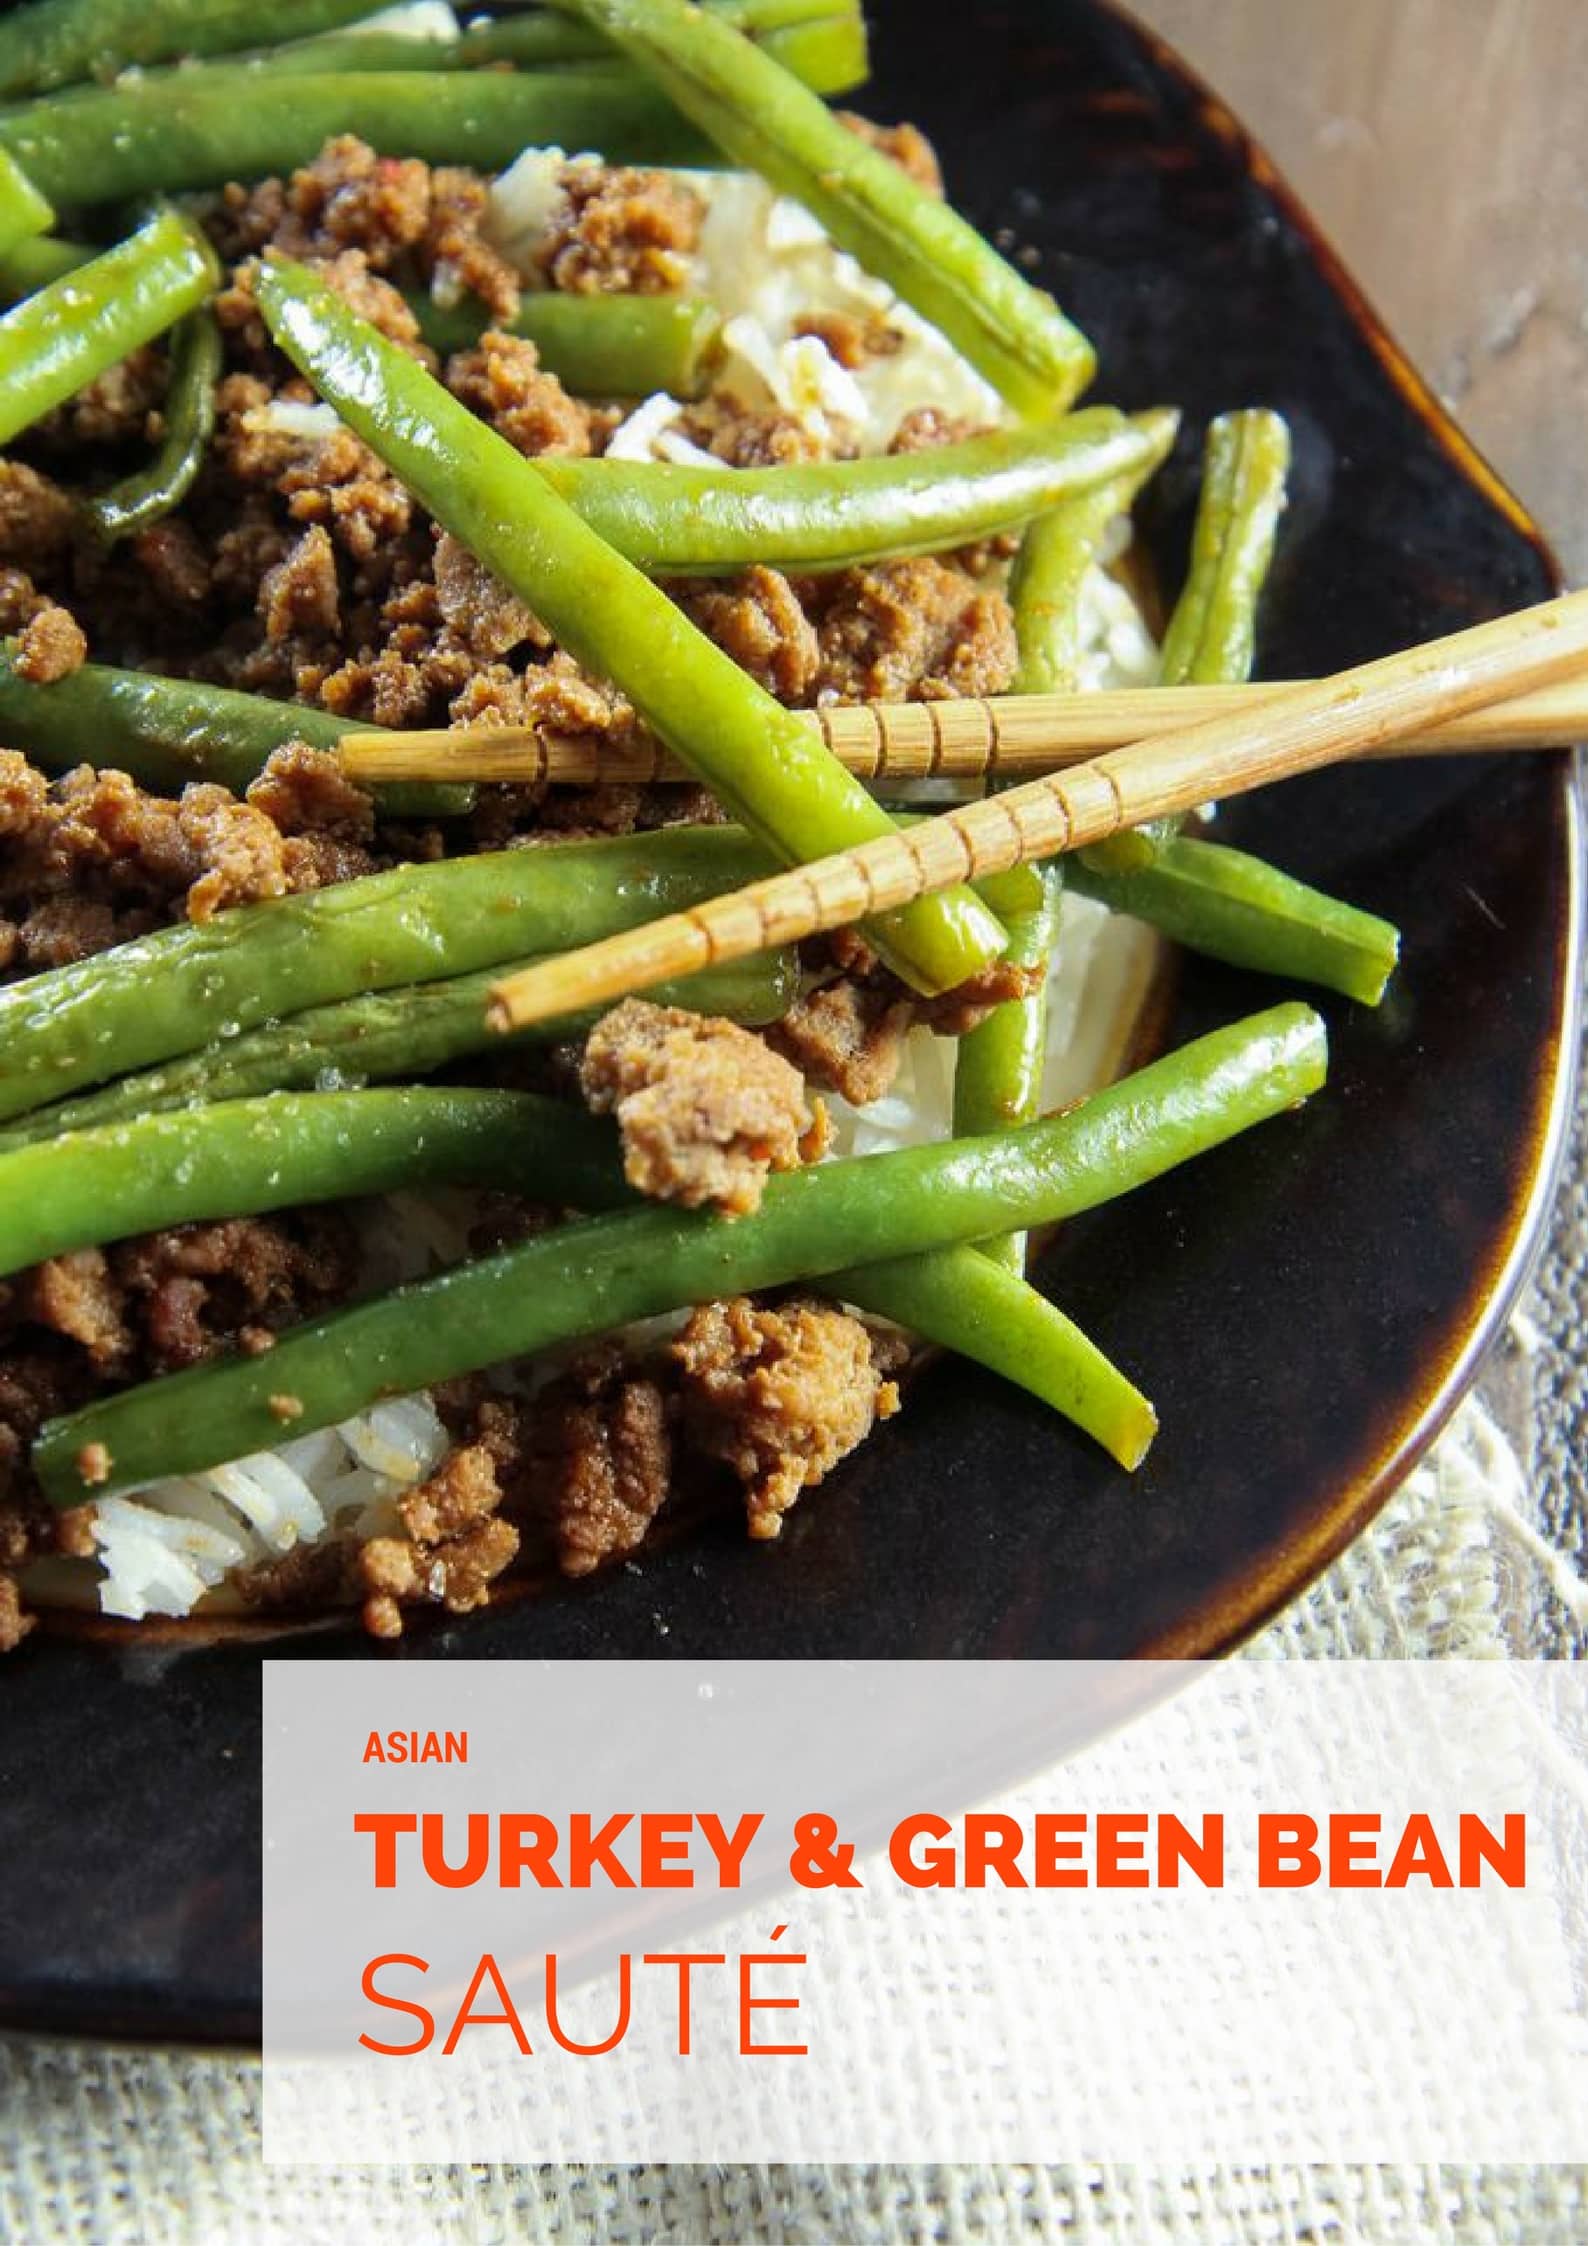 Asian Turkey and Green Bean Sauté from MomAdvice.com